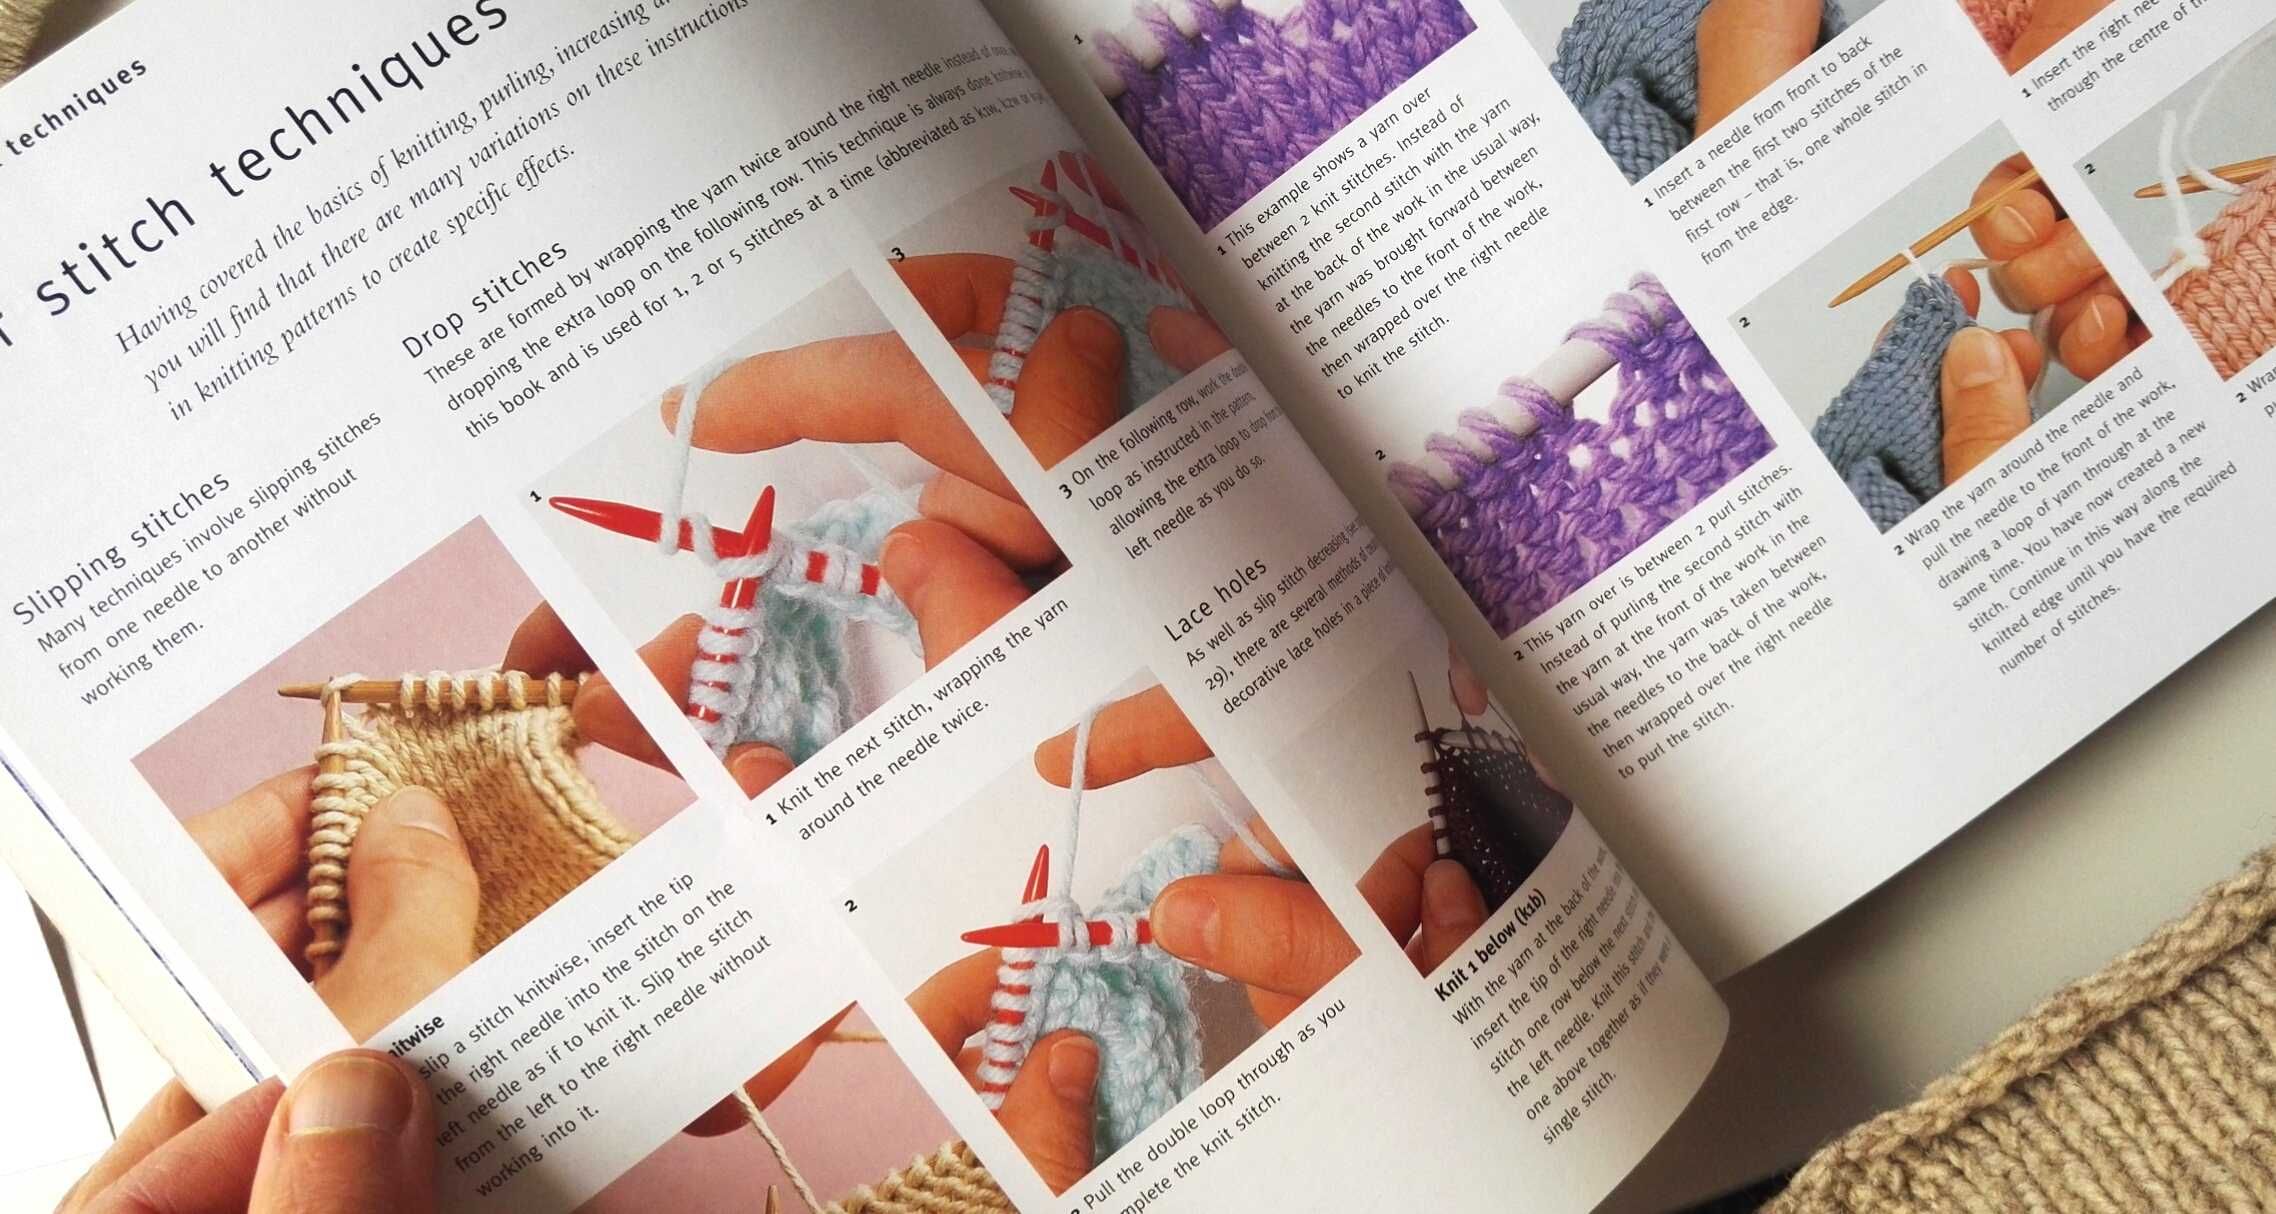 Livro tricot "Easy knitted accessories" de Jeanette Trotman